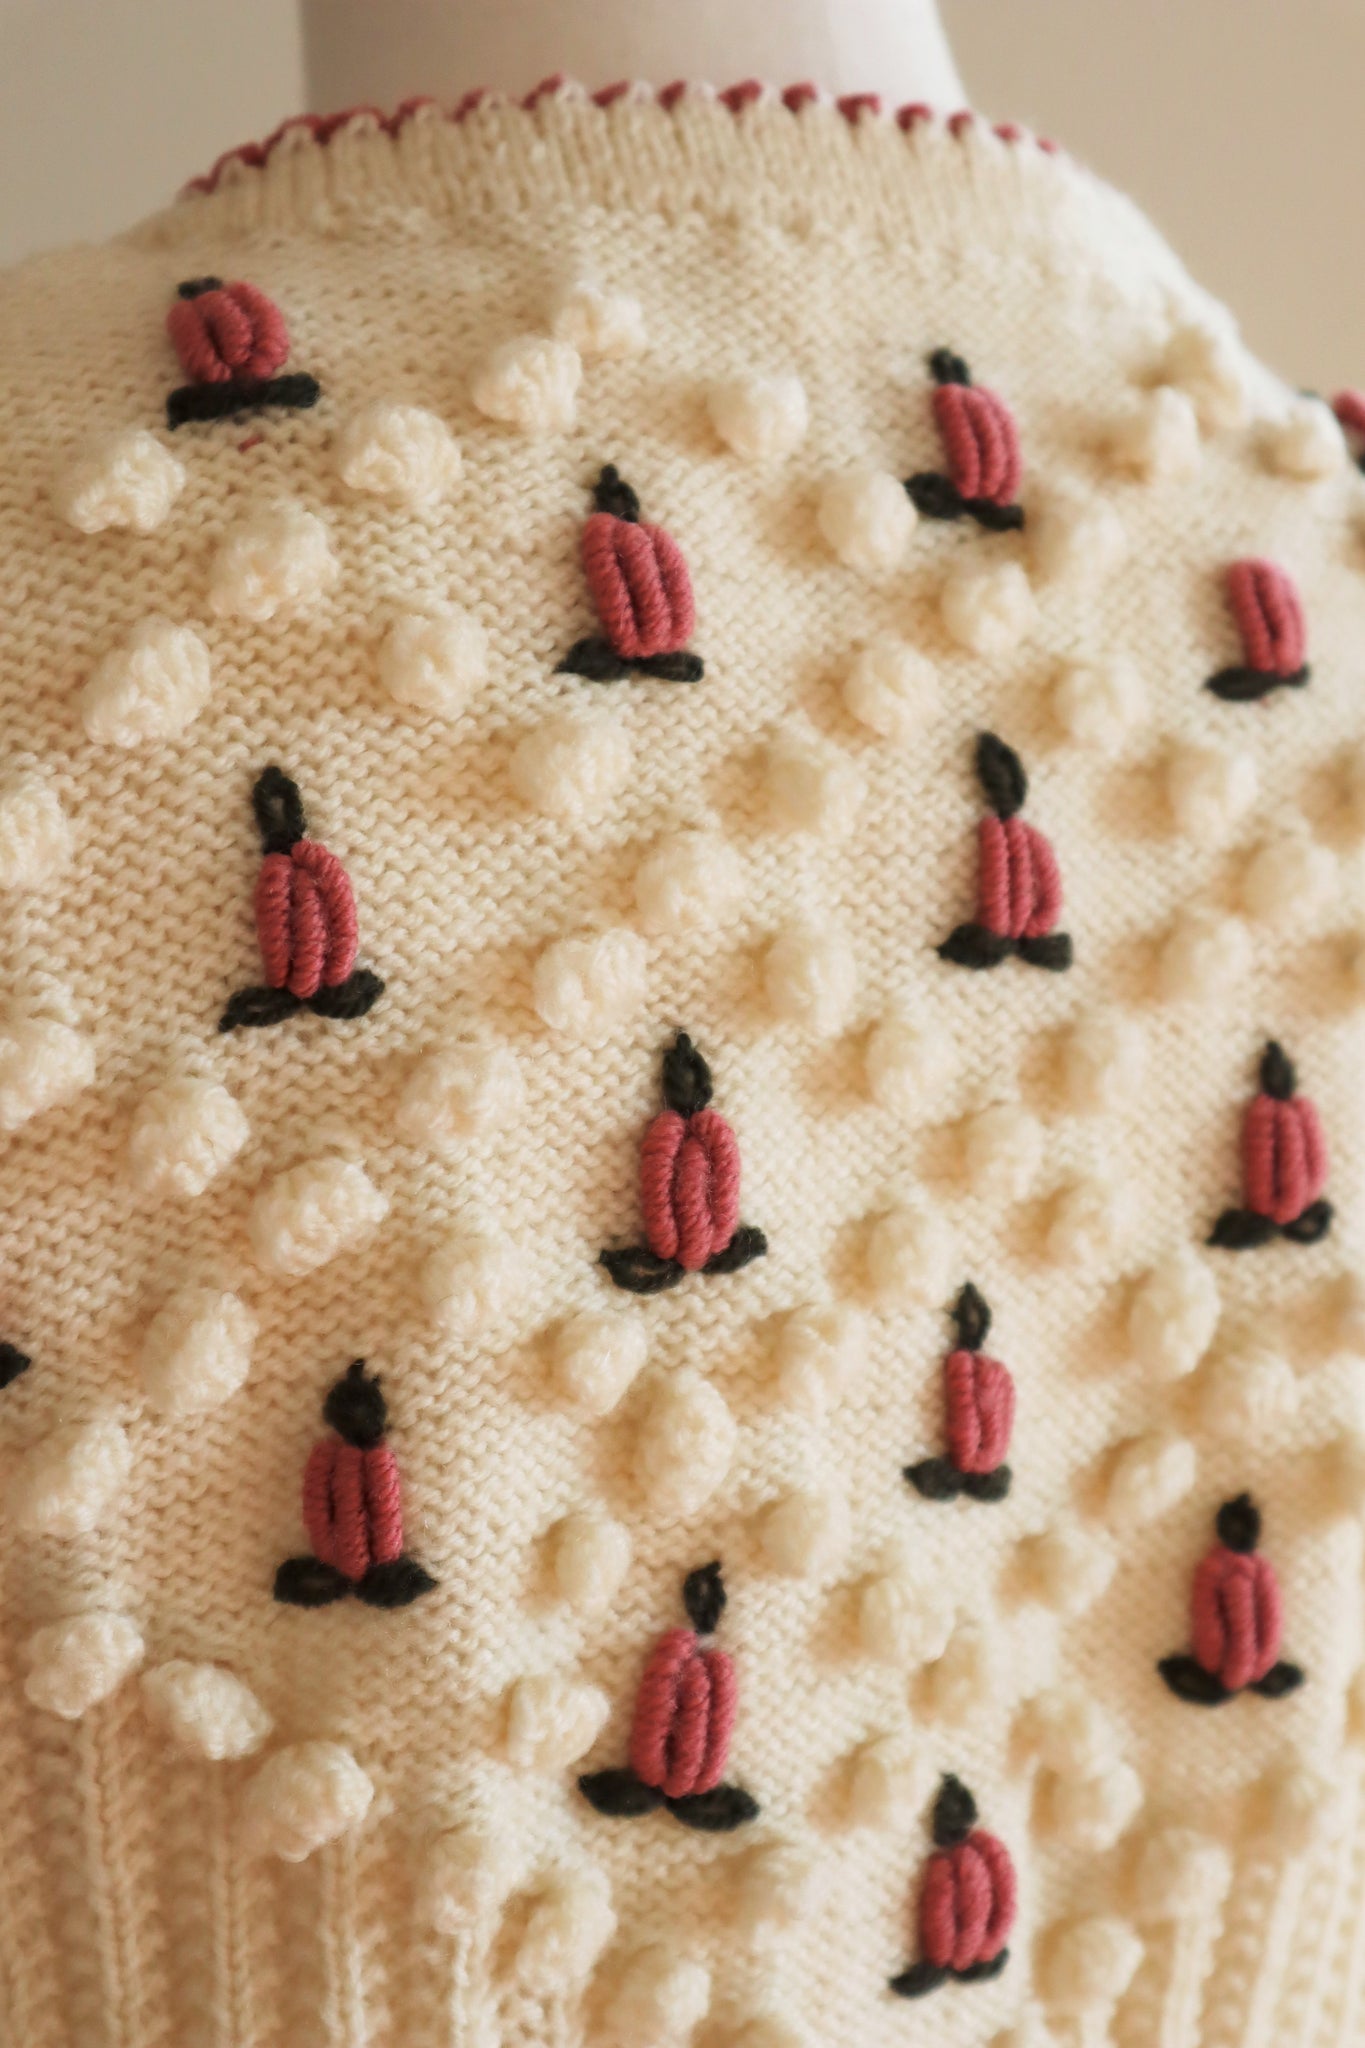 80s Austrian Hand knit Cardigan Pink flower Embroidered Cream